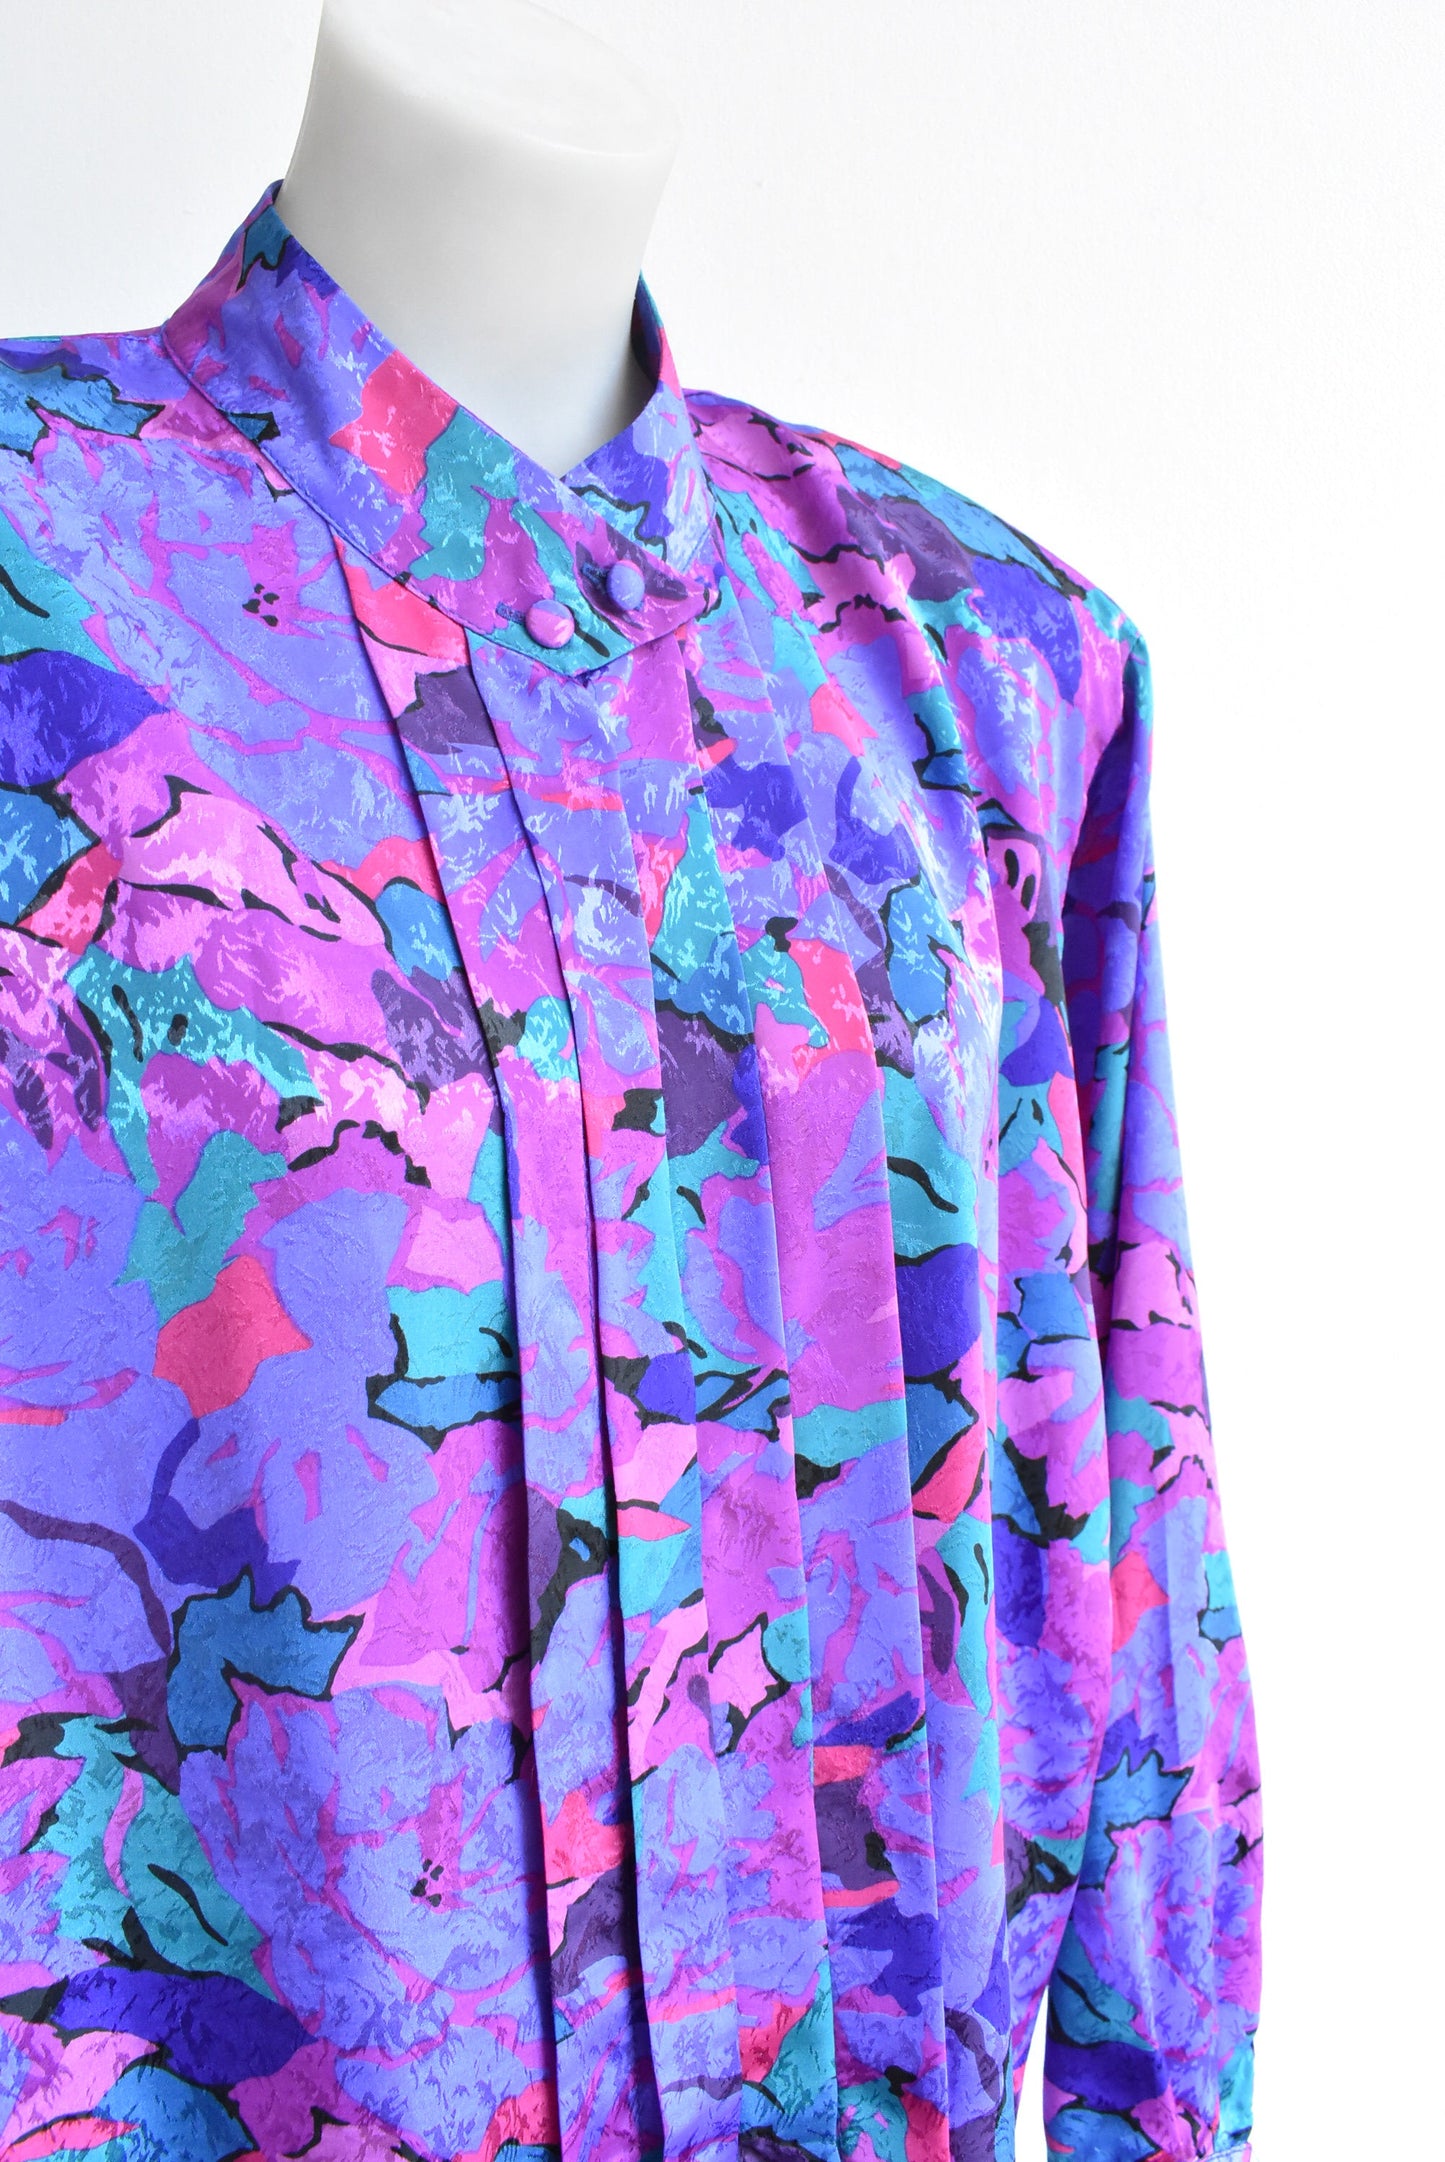 Betty R Designs retro purple shirt, size 18